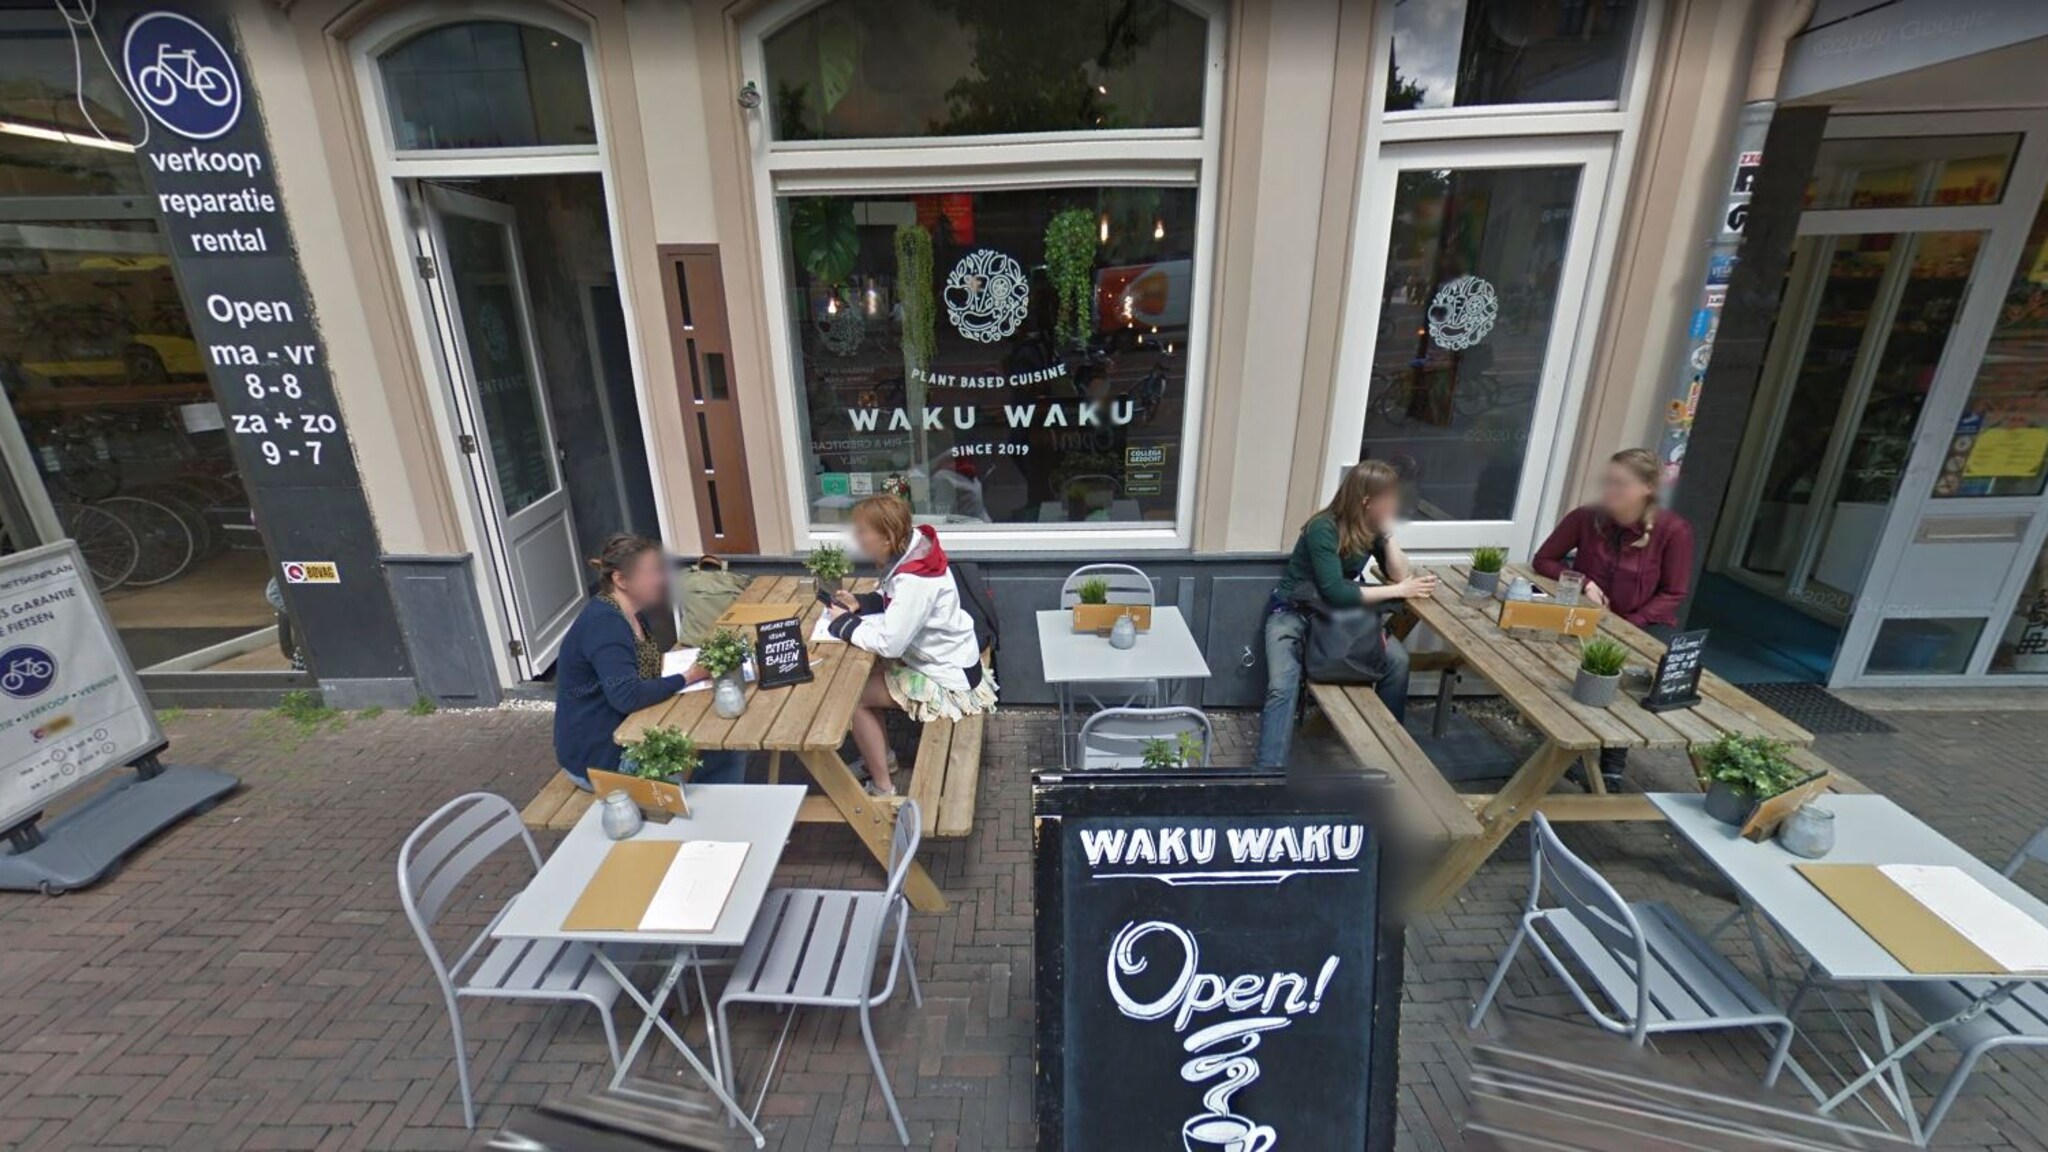 Restaurant in Utrecht closed after CoronaCheck app refusal